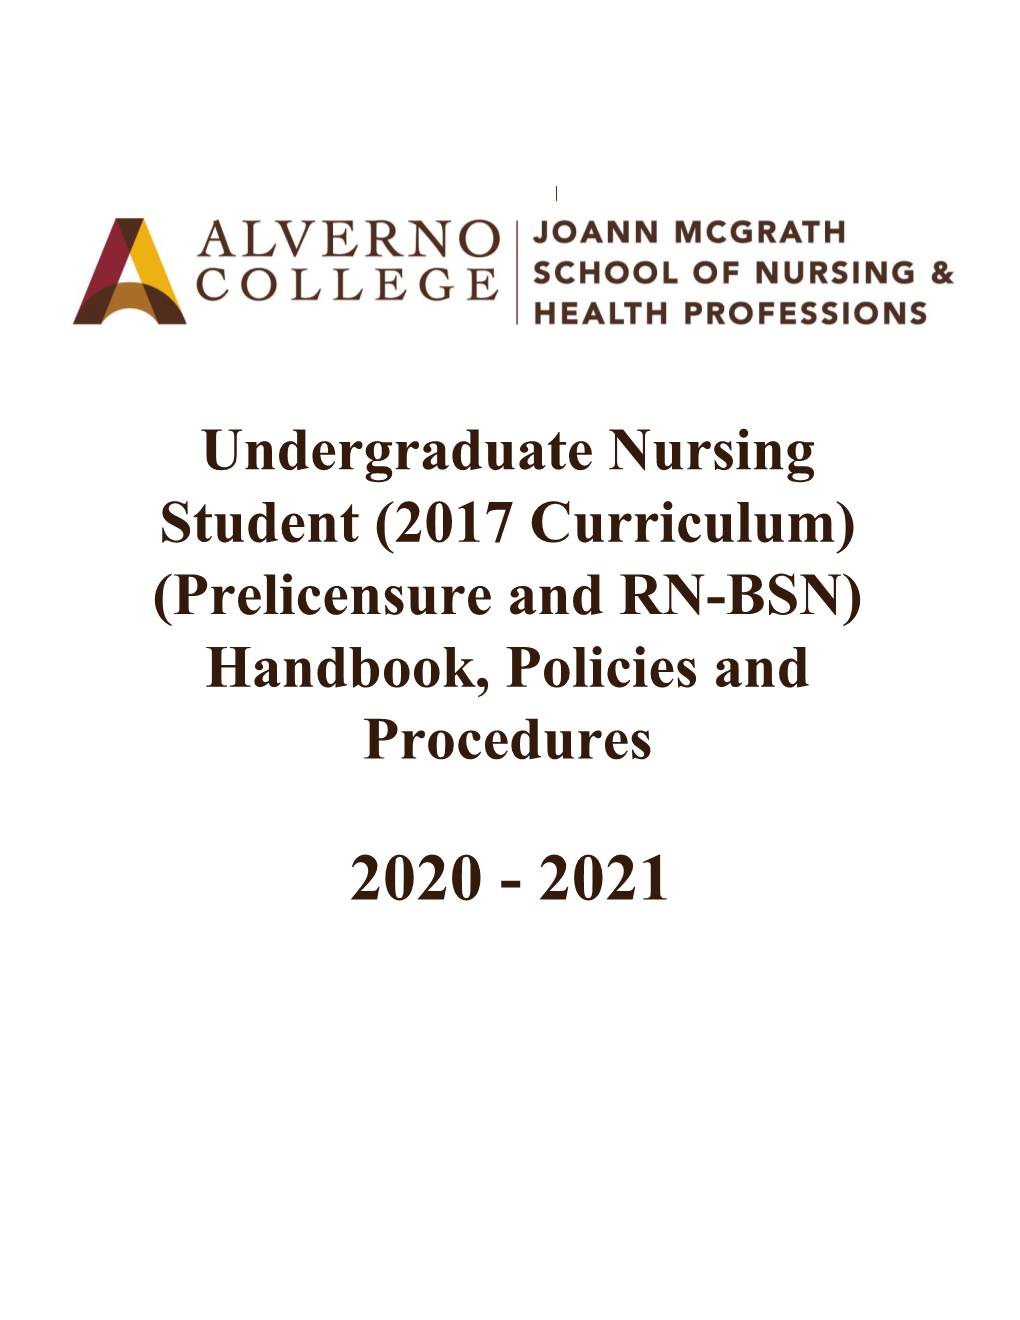 Undergraduate Nursing Student (2017 Curriculum) (Prelicensure and RN-BSN) Handbook, Policies and Procedures